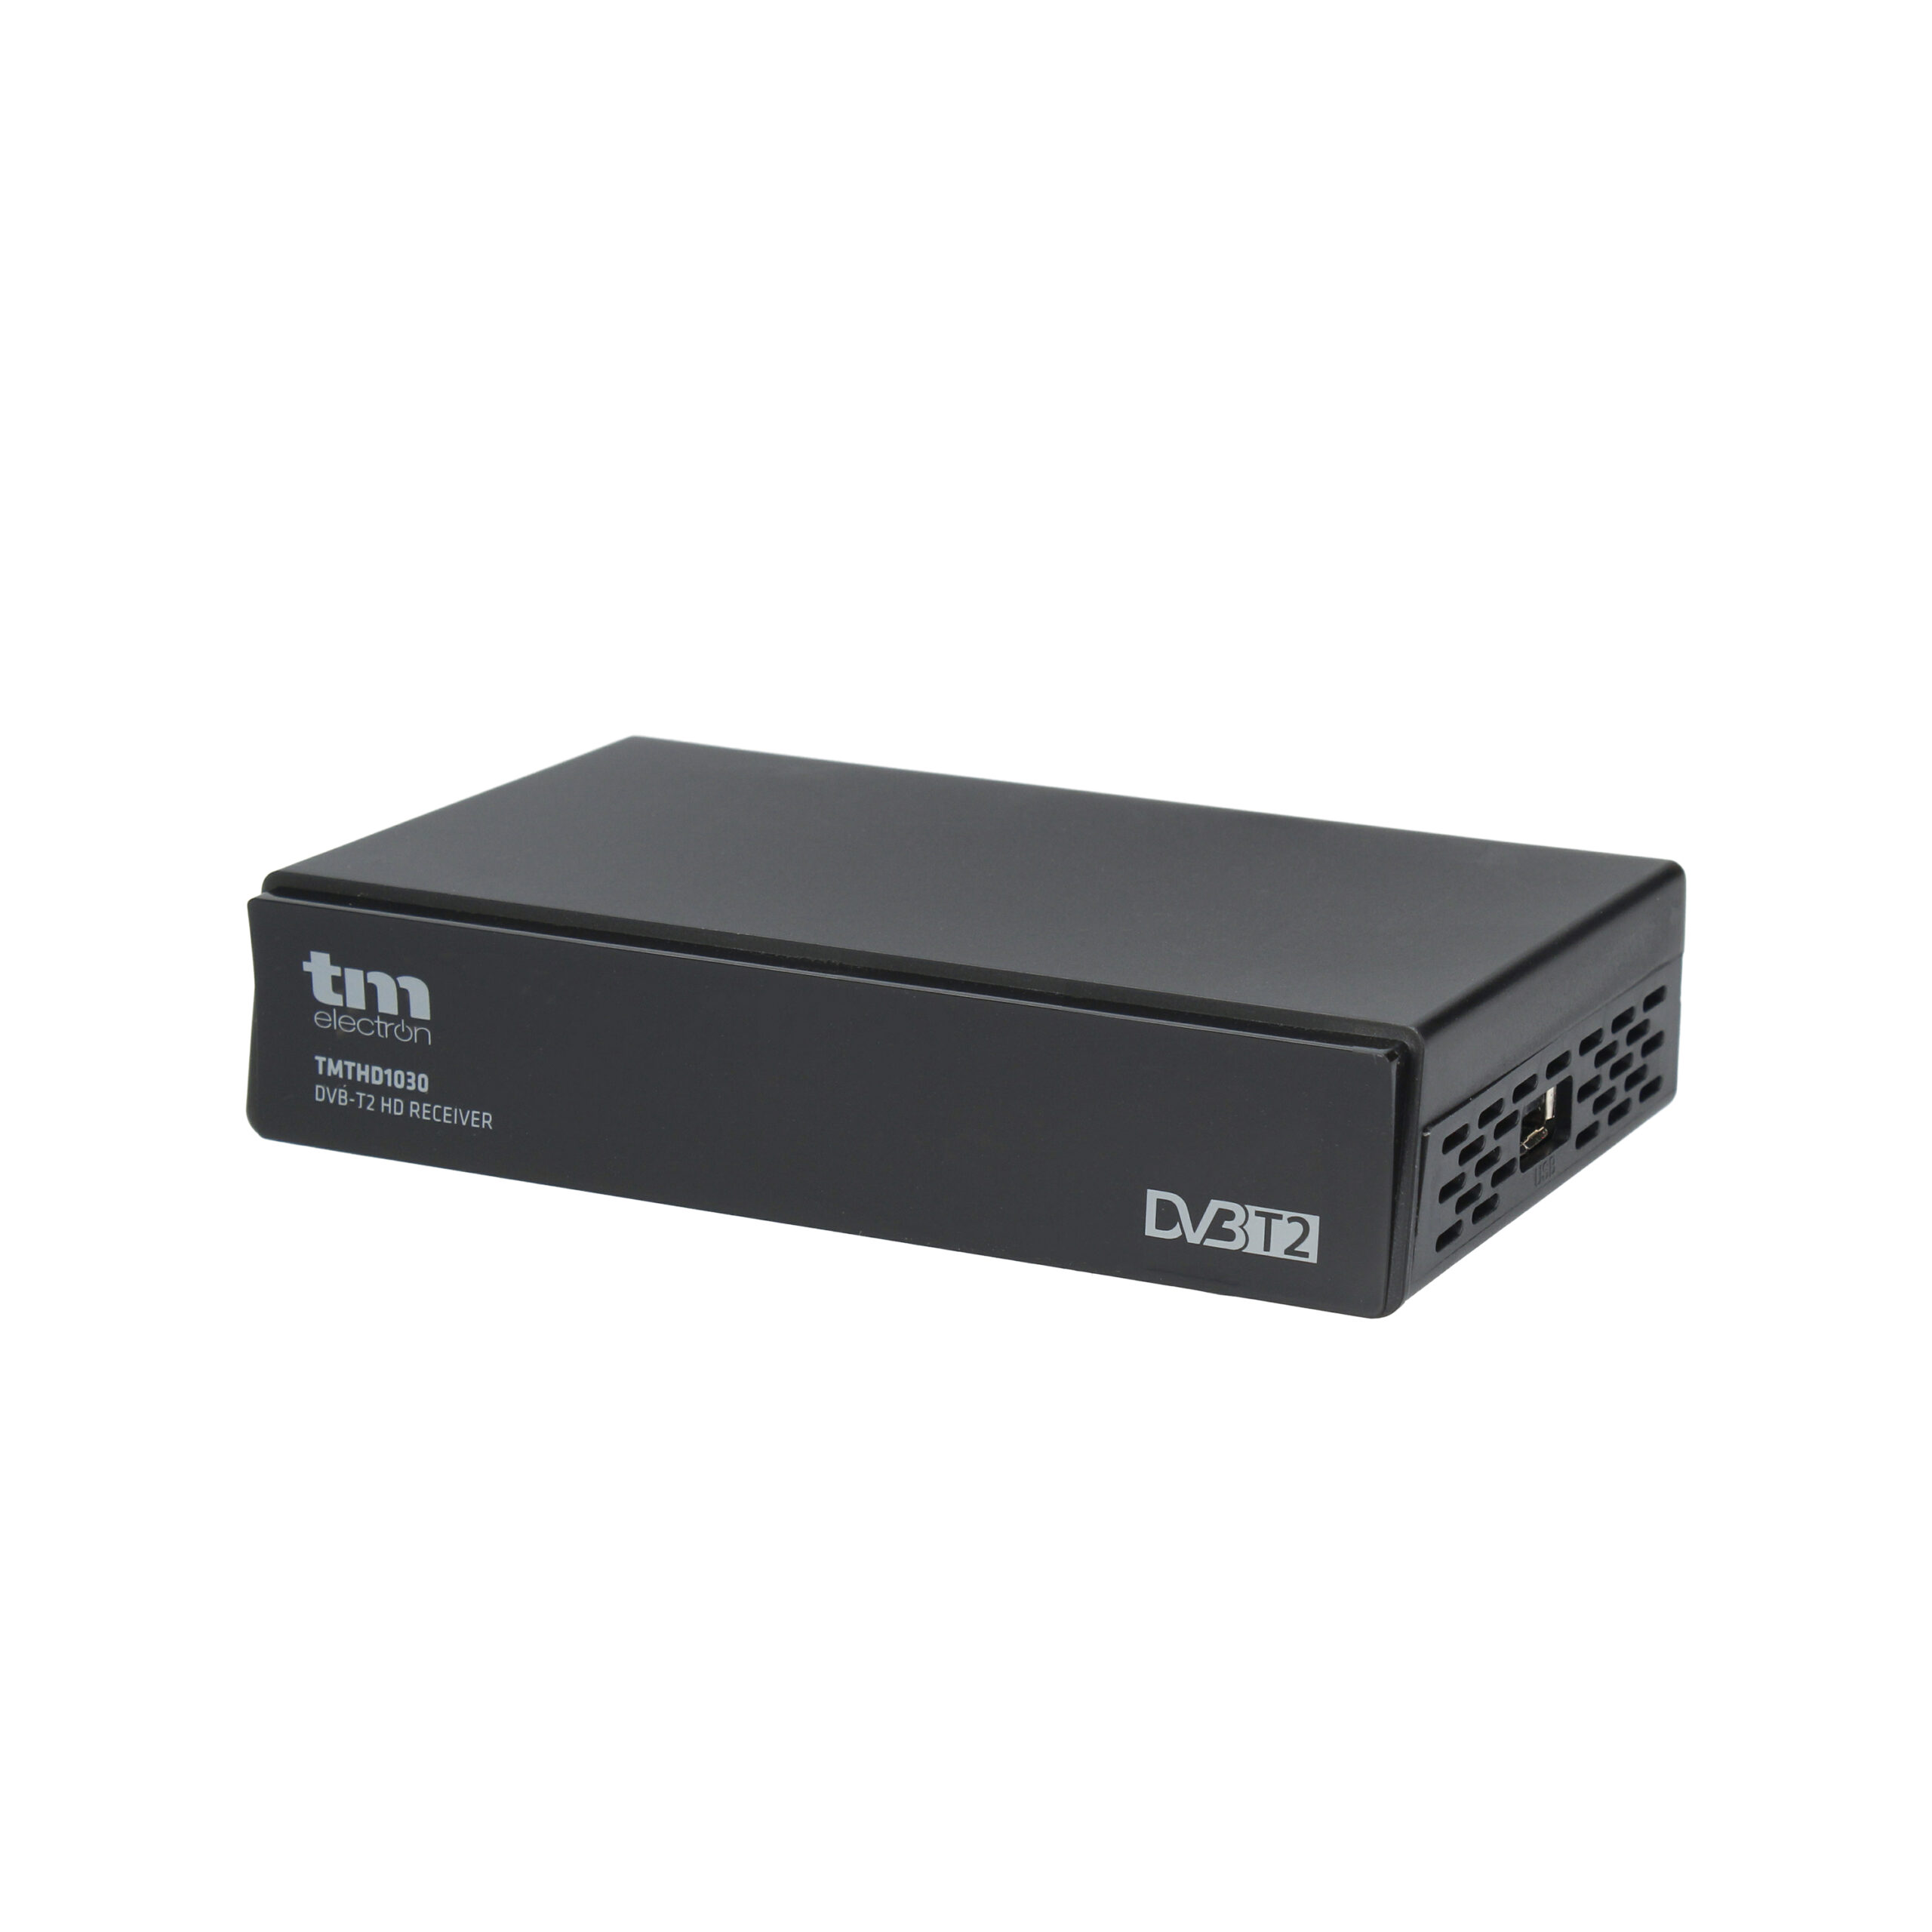 Receptor DVB-T2 Grabador